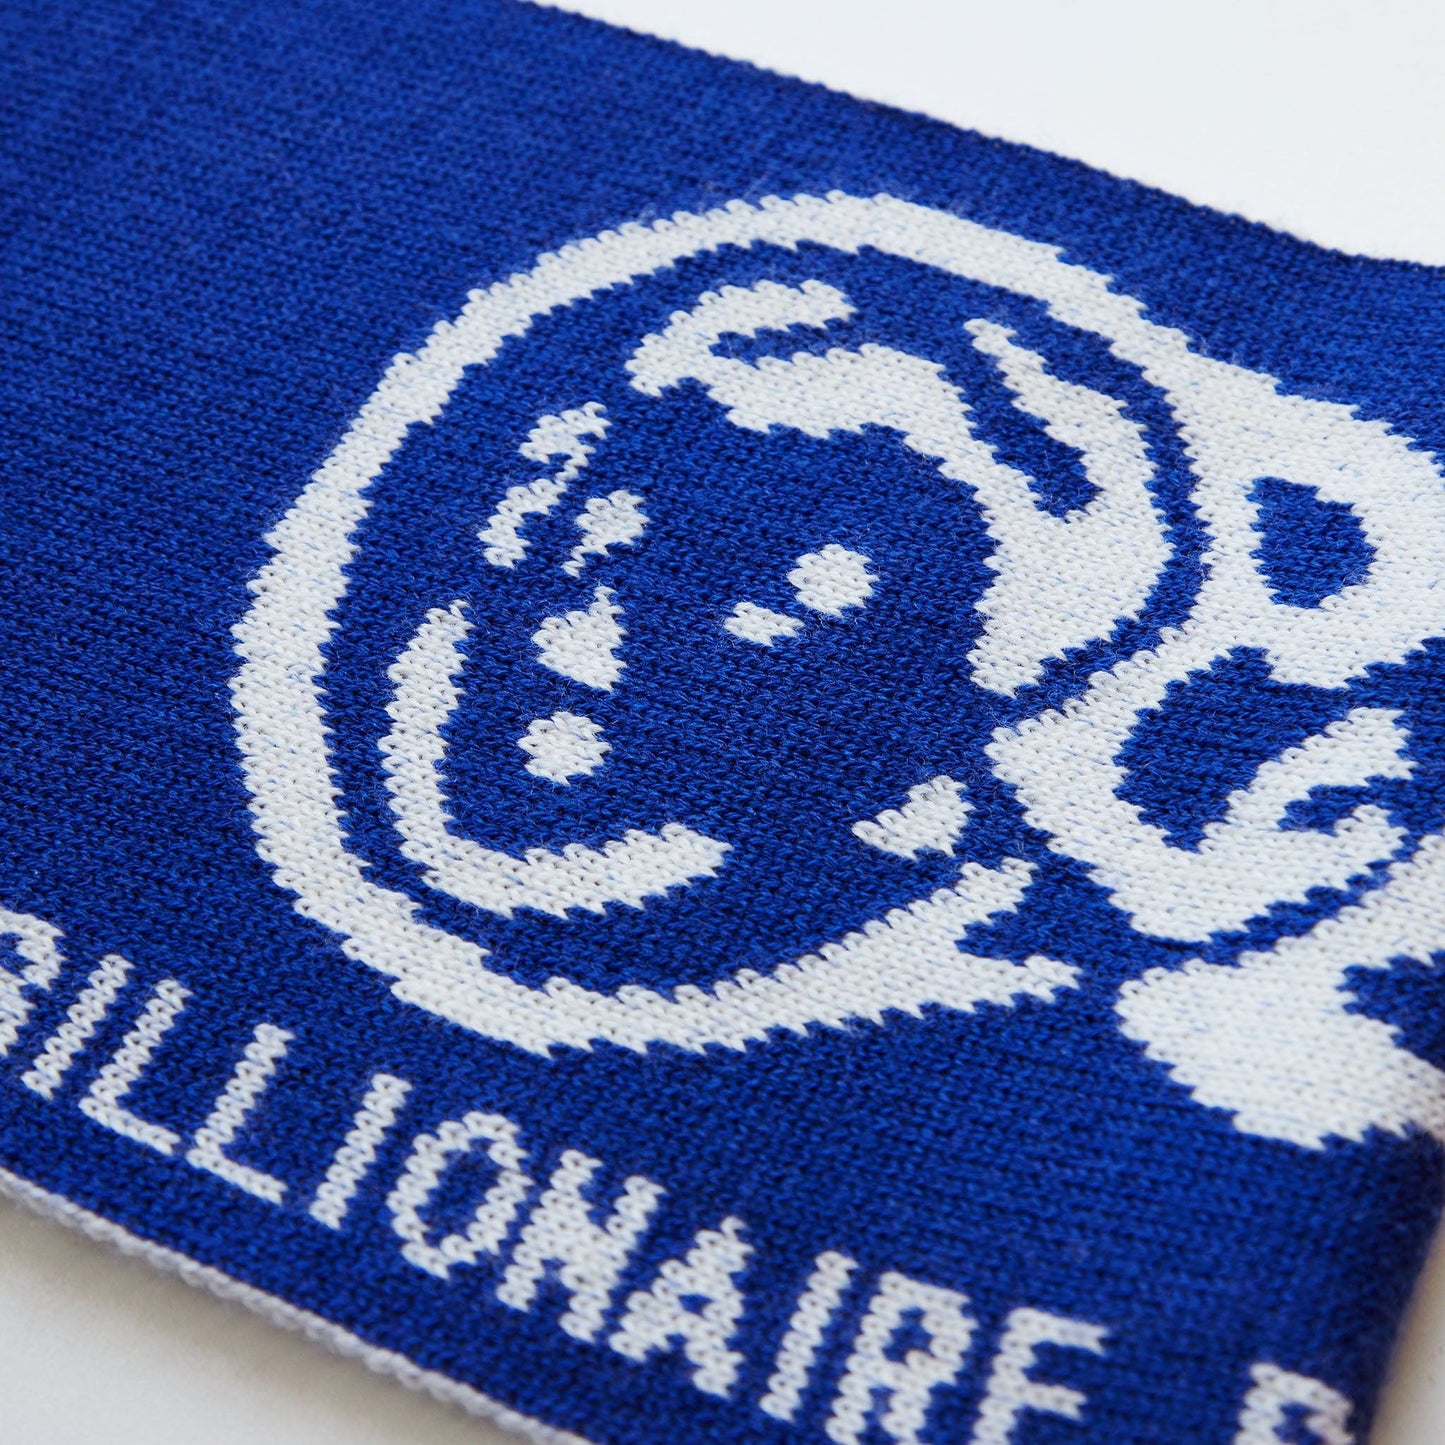 OG Logo Dot Gradient Scarf - Billionaire Boys Club Exclusives